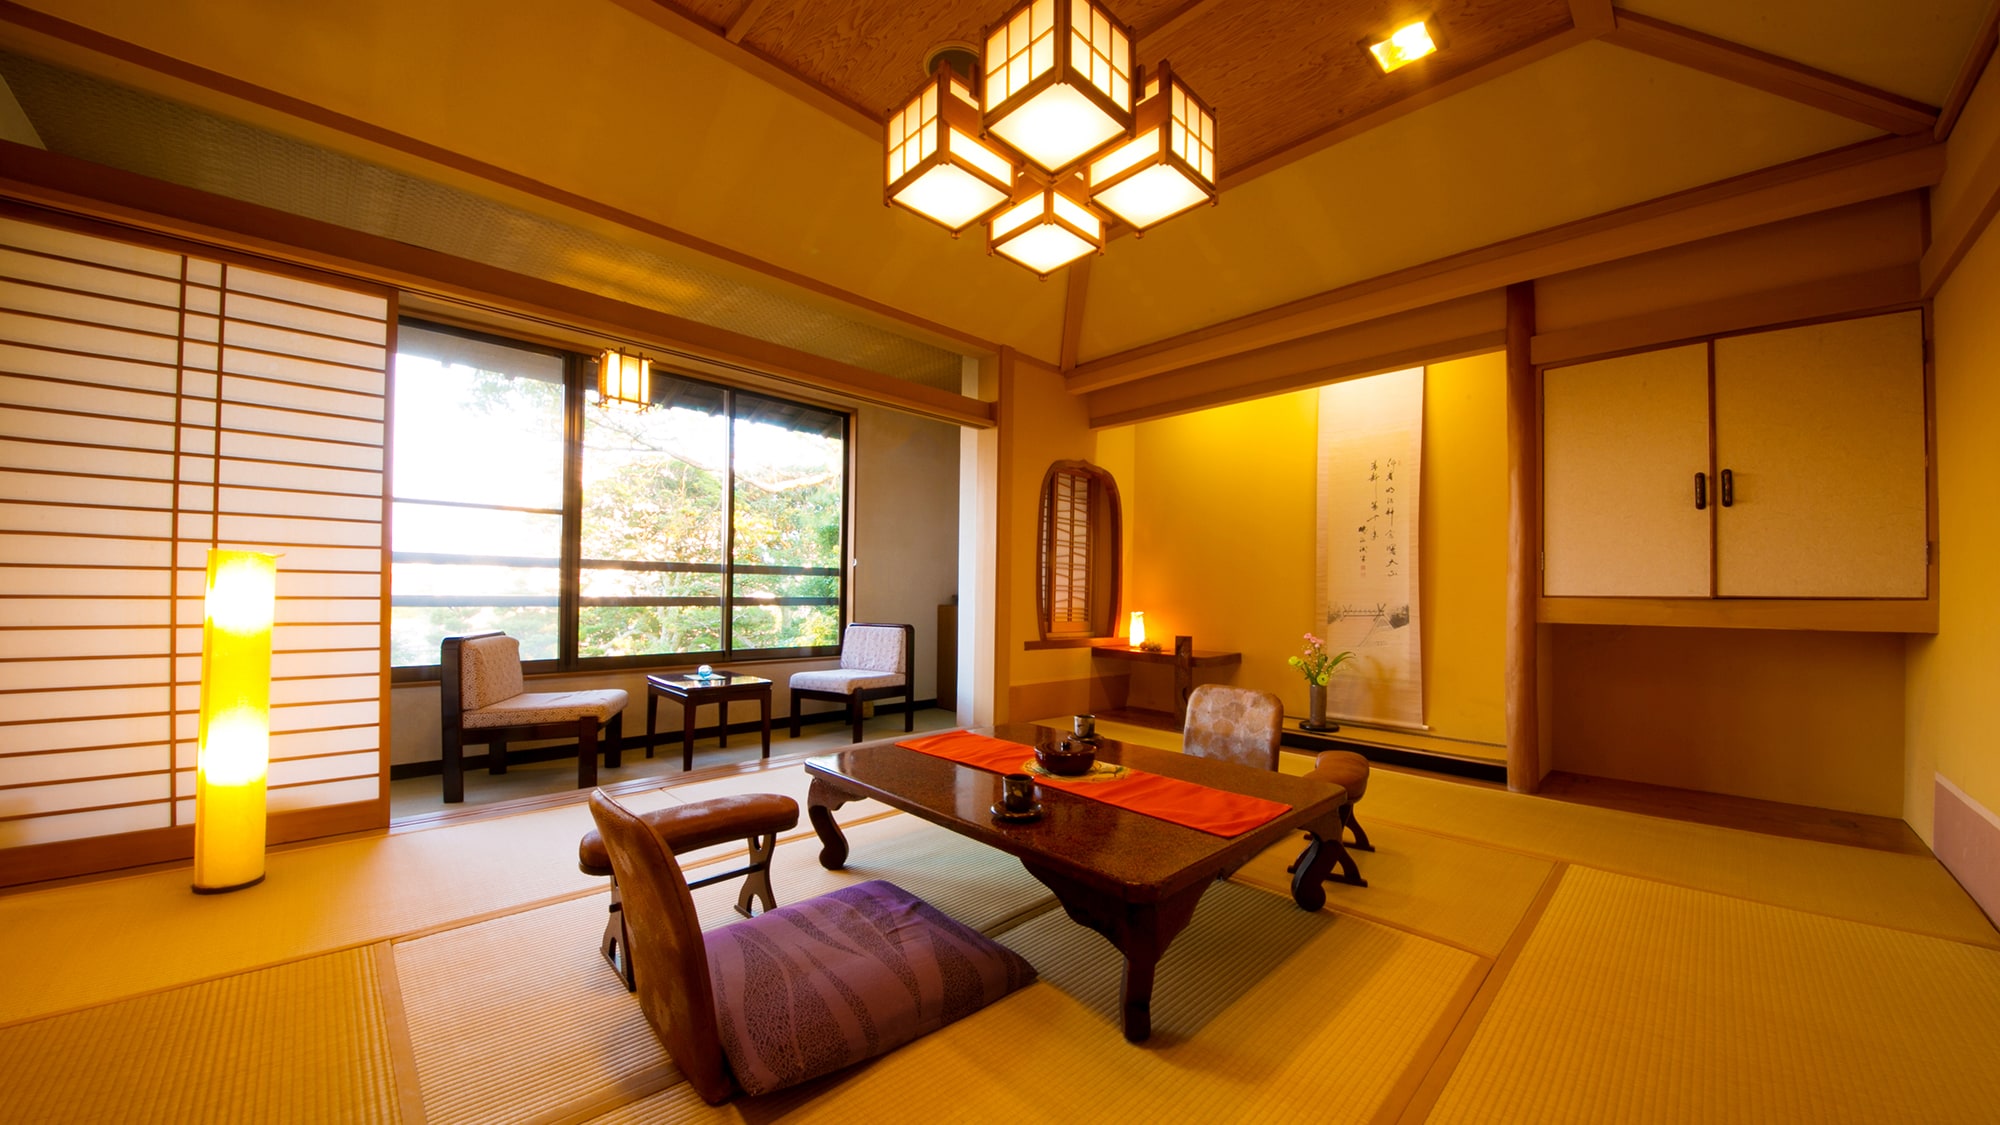 ◆ Japanese-style room 10 tatami mats "Phoenix" ◆